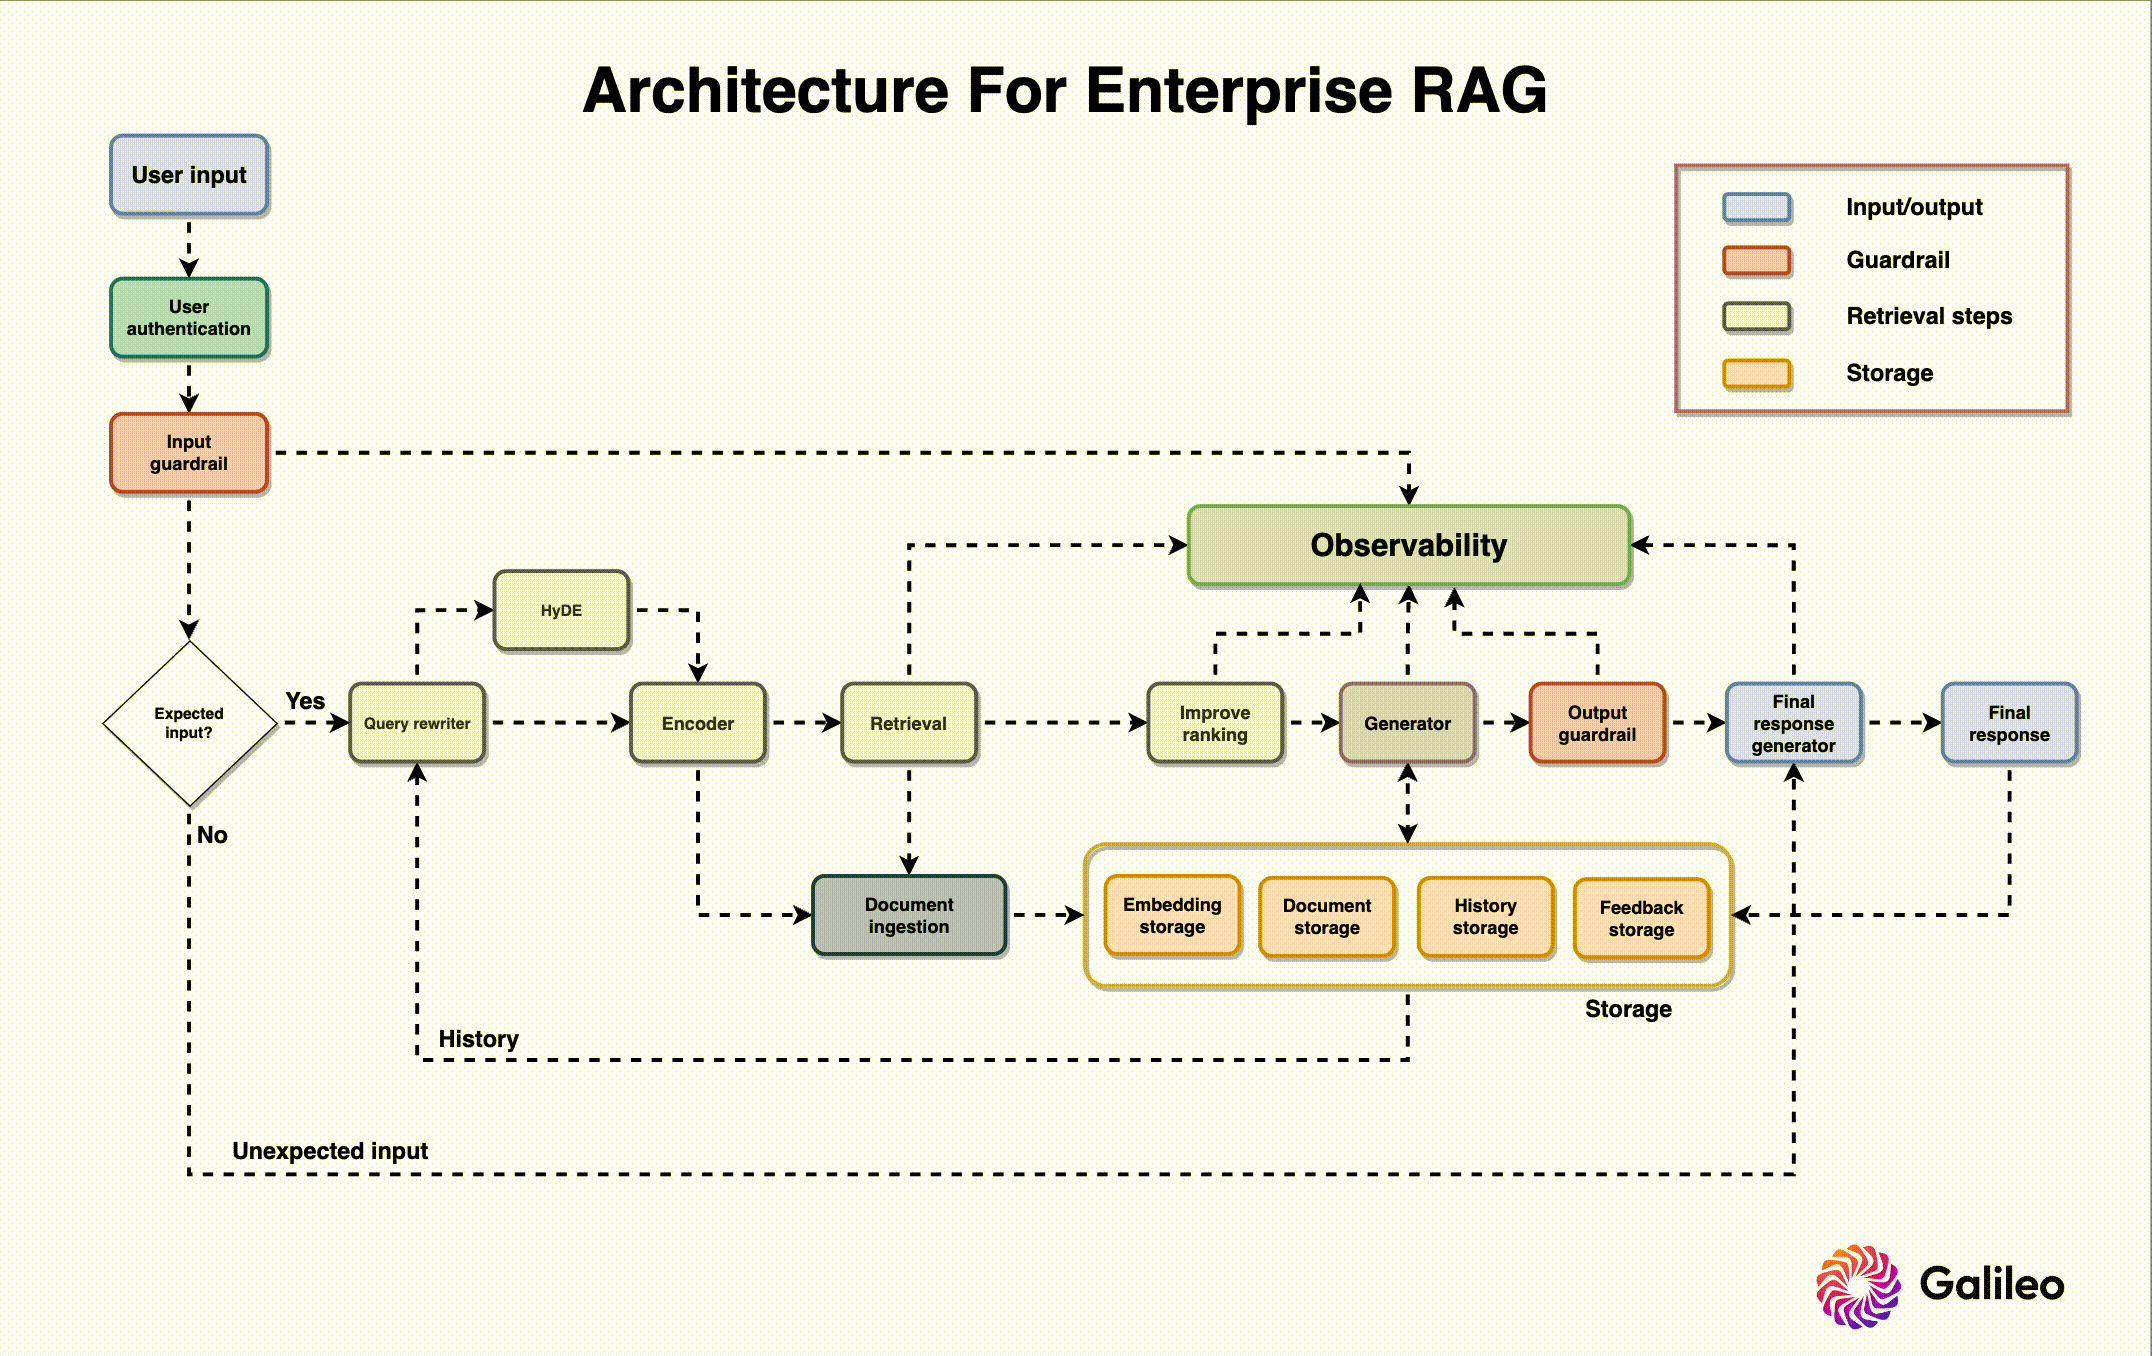 Mastering RAG: How To Architect An Enterprise RAG System - Galileo